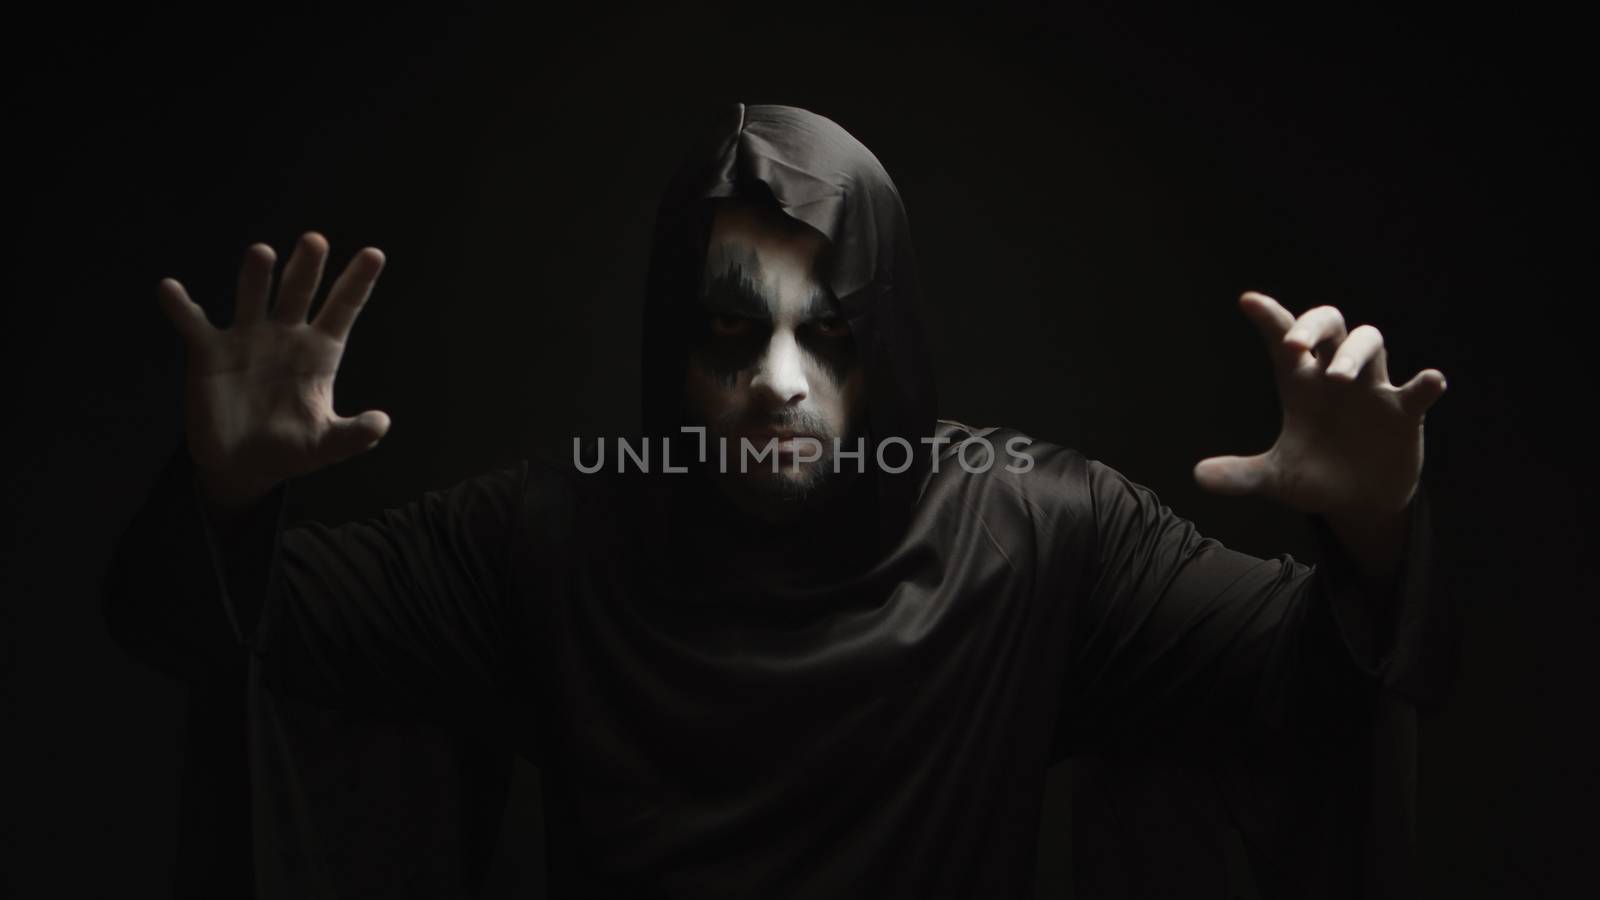 Dangerous hell demon doing magic over black background by DCStudio